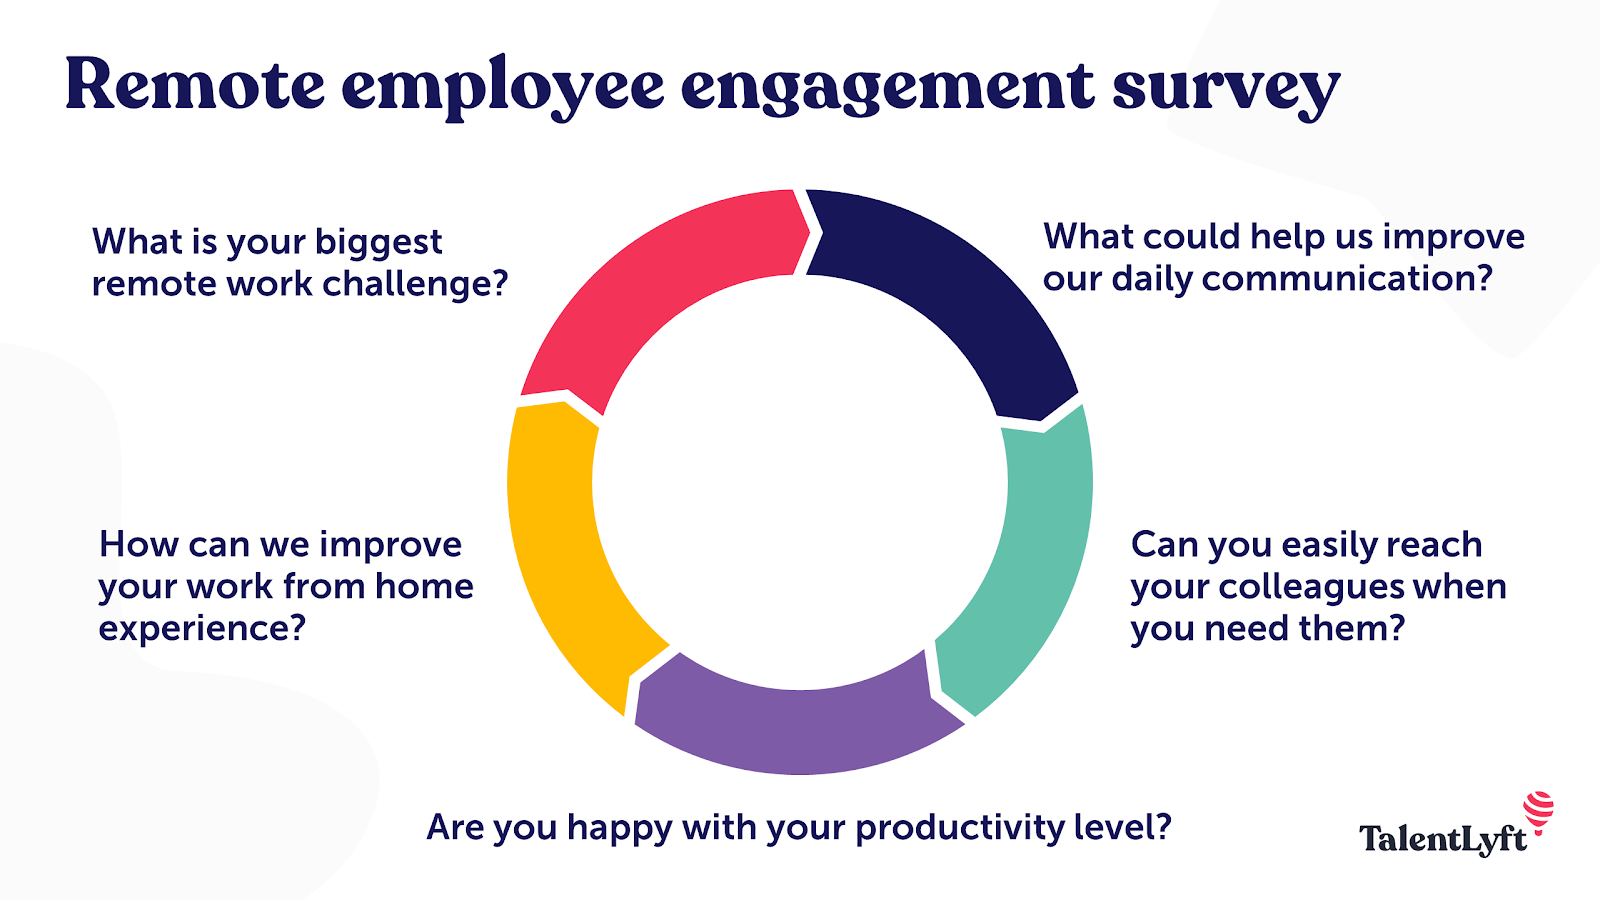 Remote employee engagement survey questions